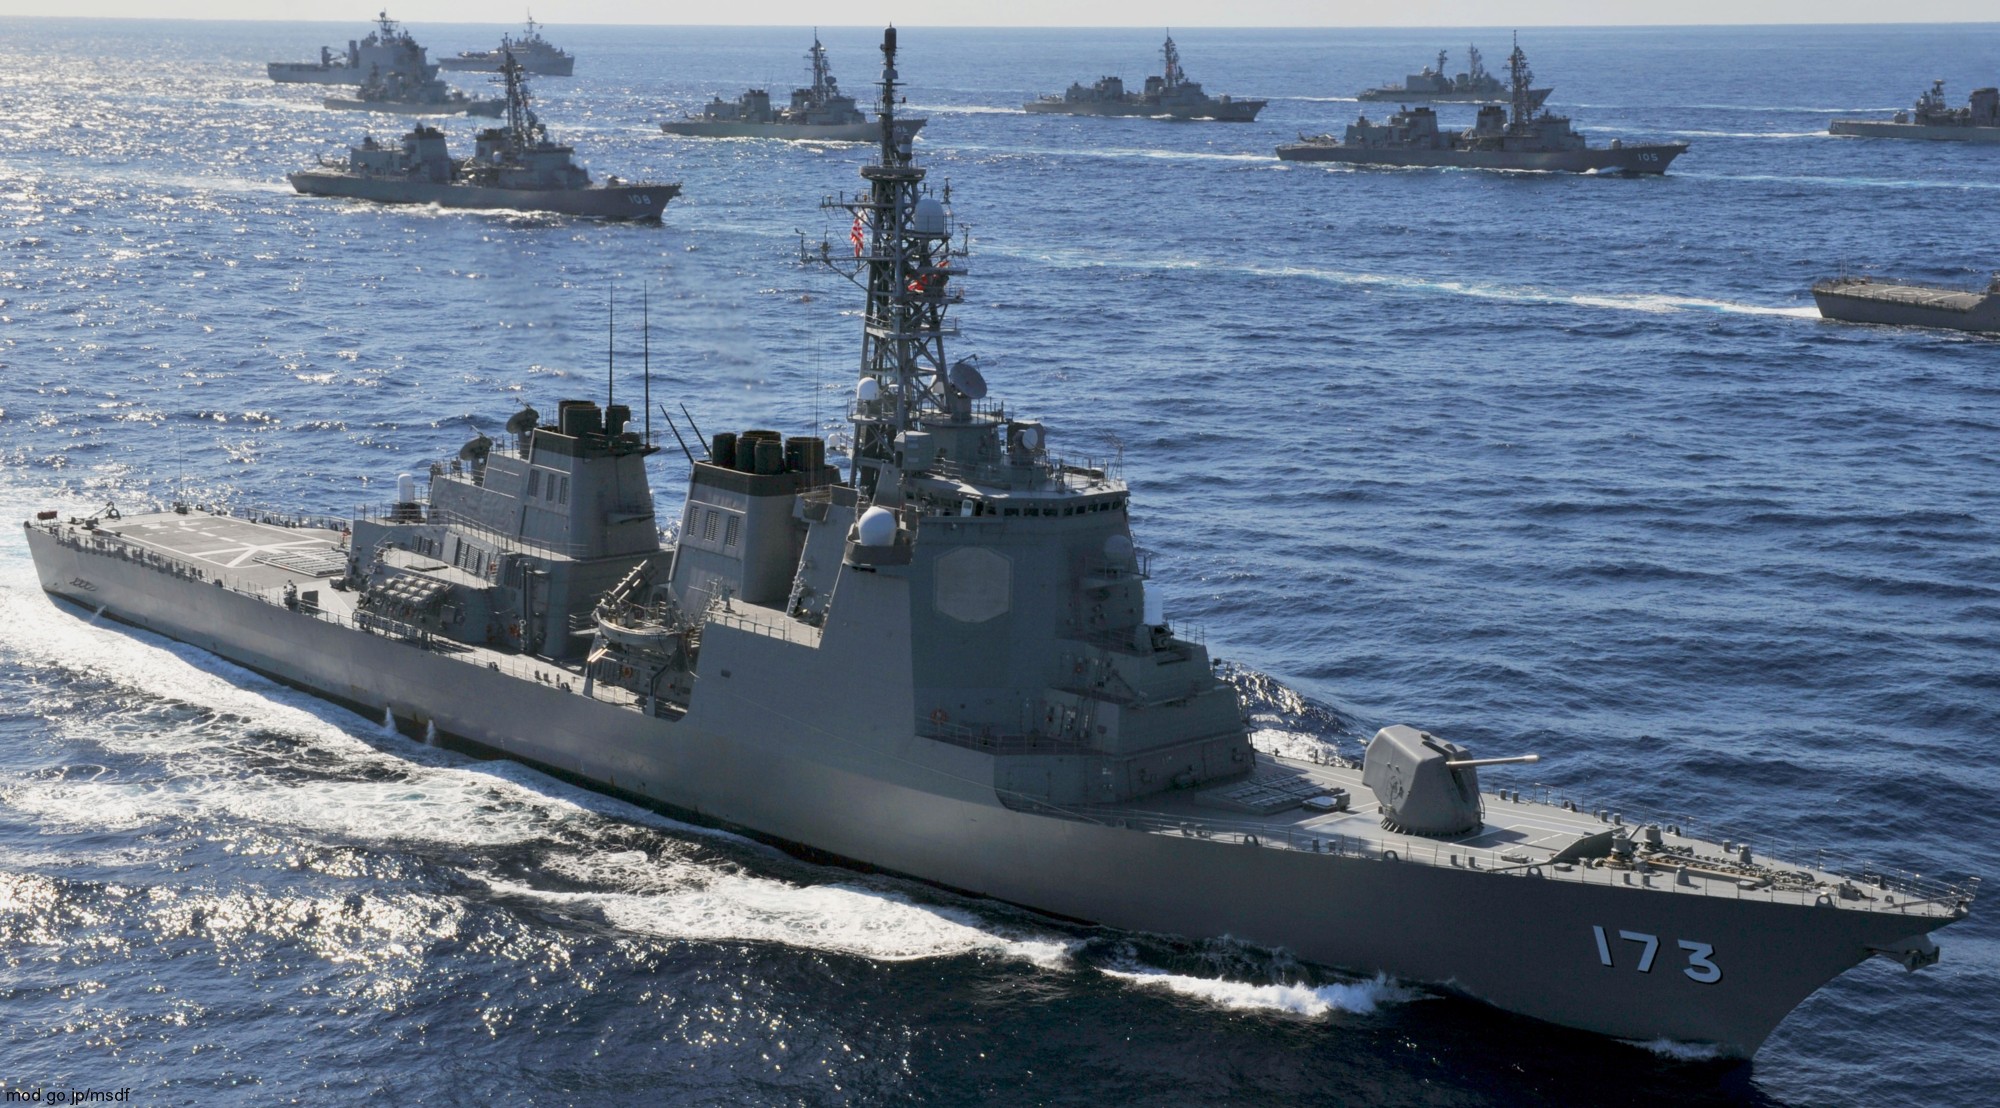 ddg-173 js kongo class guided missile destroyer aegis japan maritime self defense force jmsdf 05